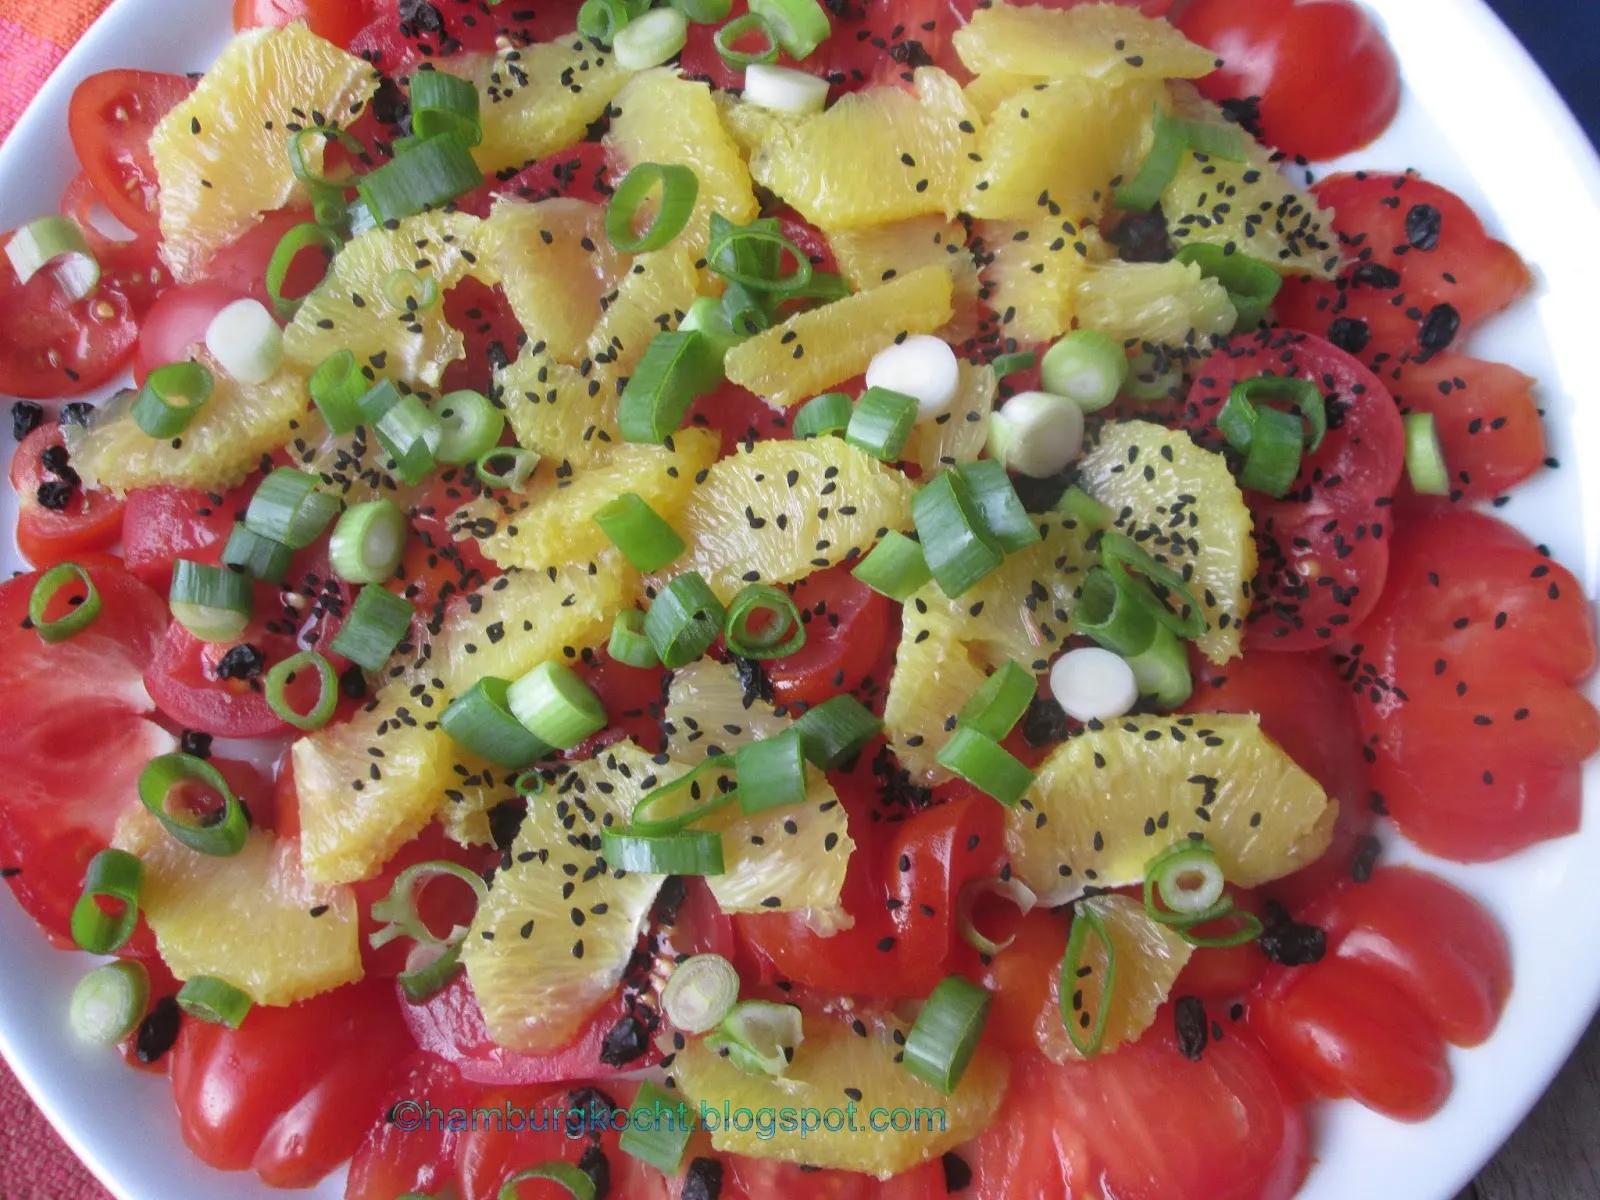 Hamburg kocht!: Tomaten-Orangen-Salat mit Granatapfelkernen